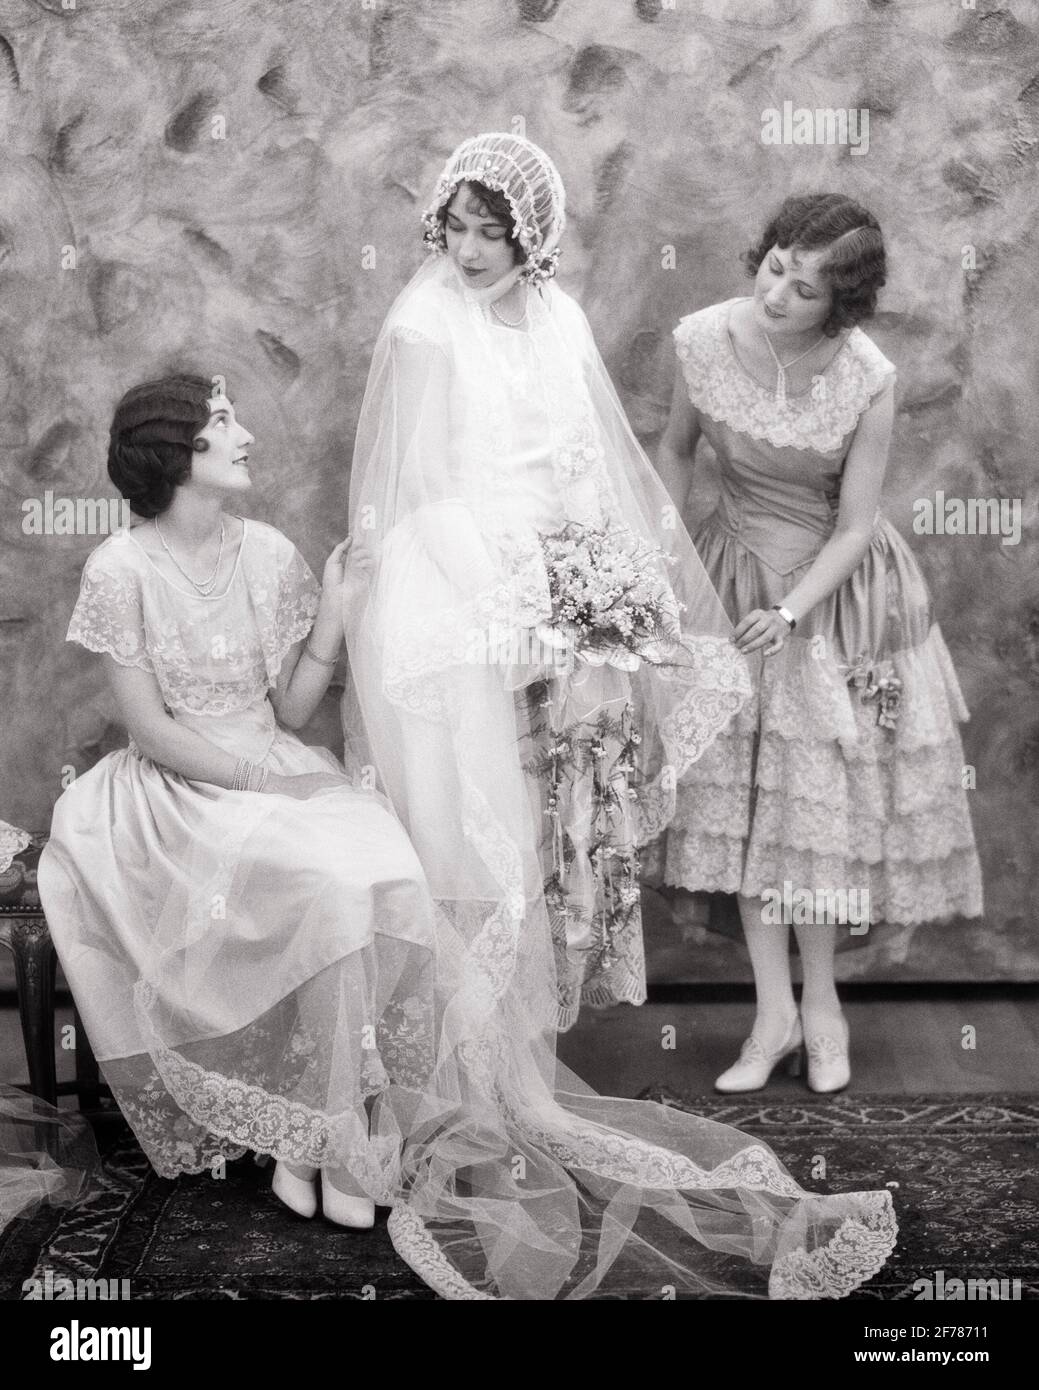 vintage chanel white dress